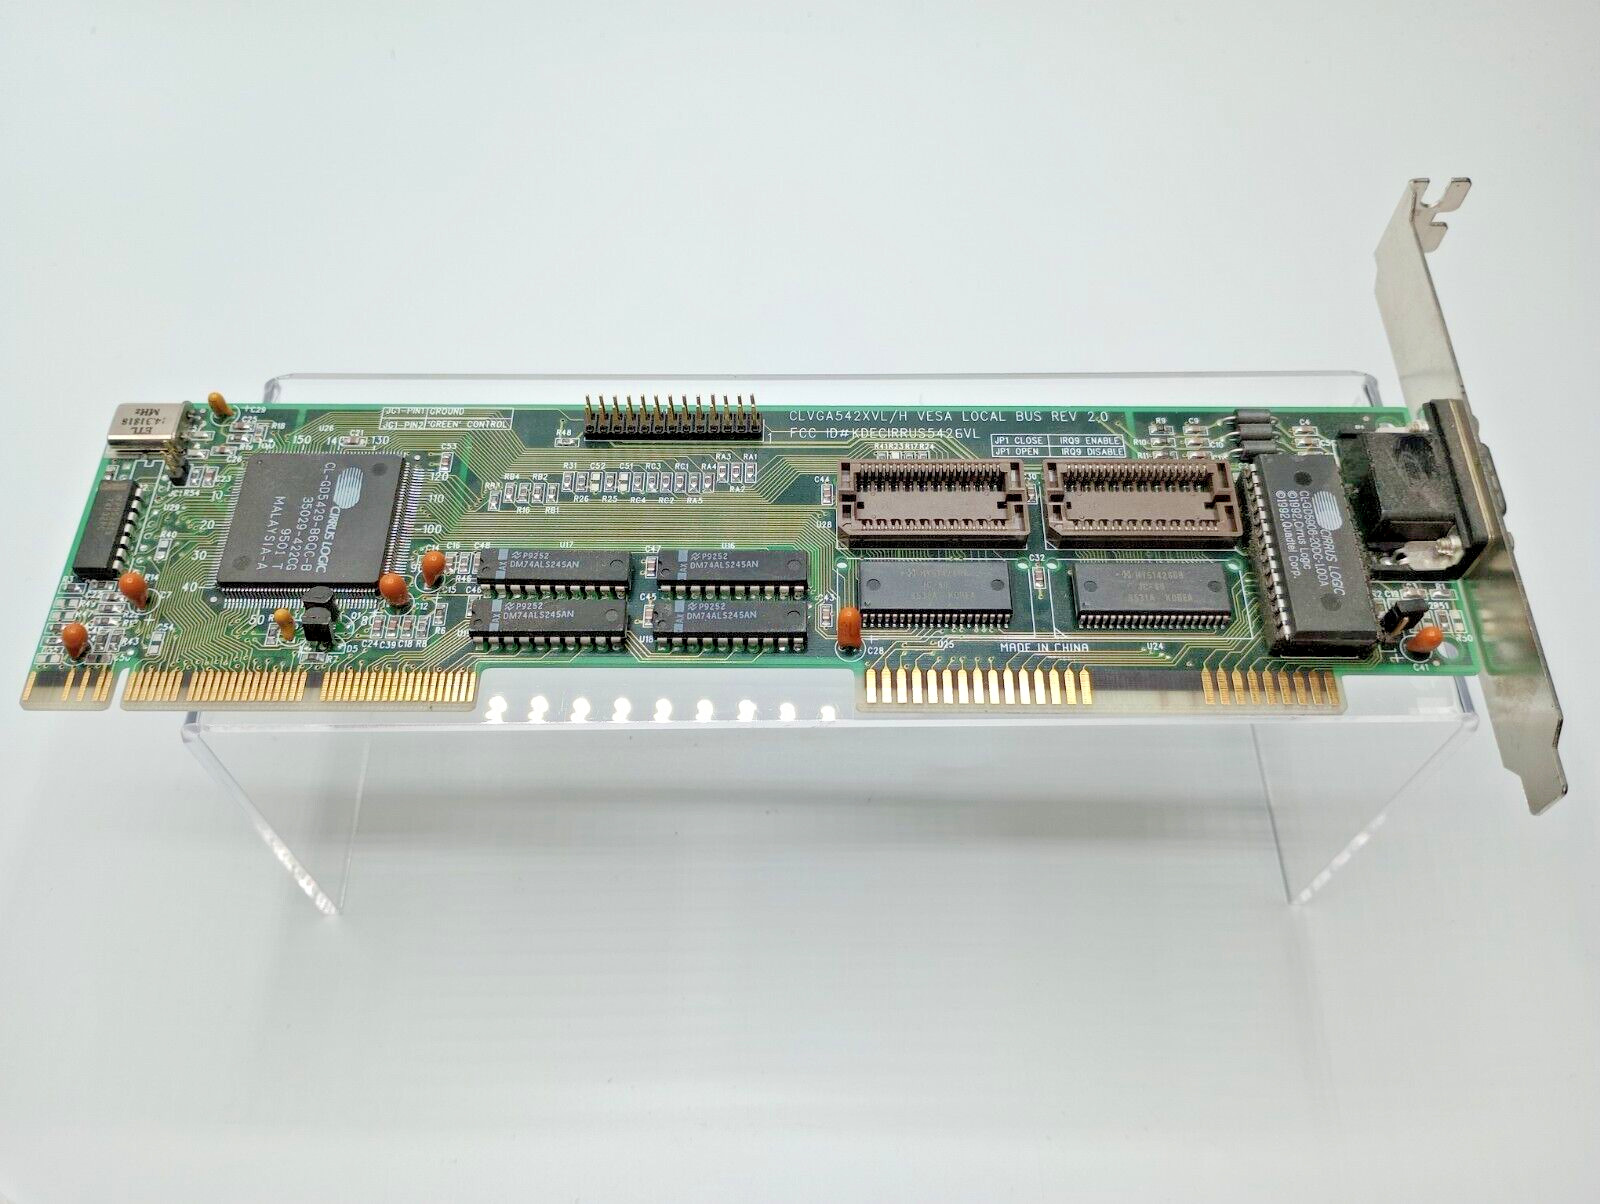 1994 VLB VGA Video Card CLVGA542XVL/H (Cirrus Logic GD5429) 512 KB DRAM - 486